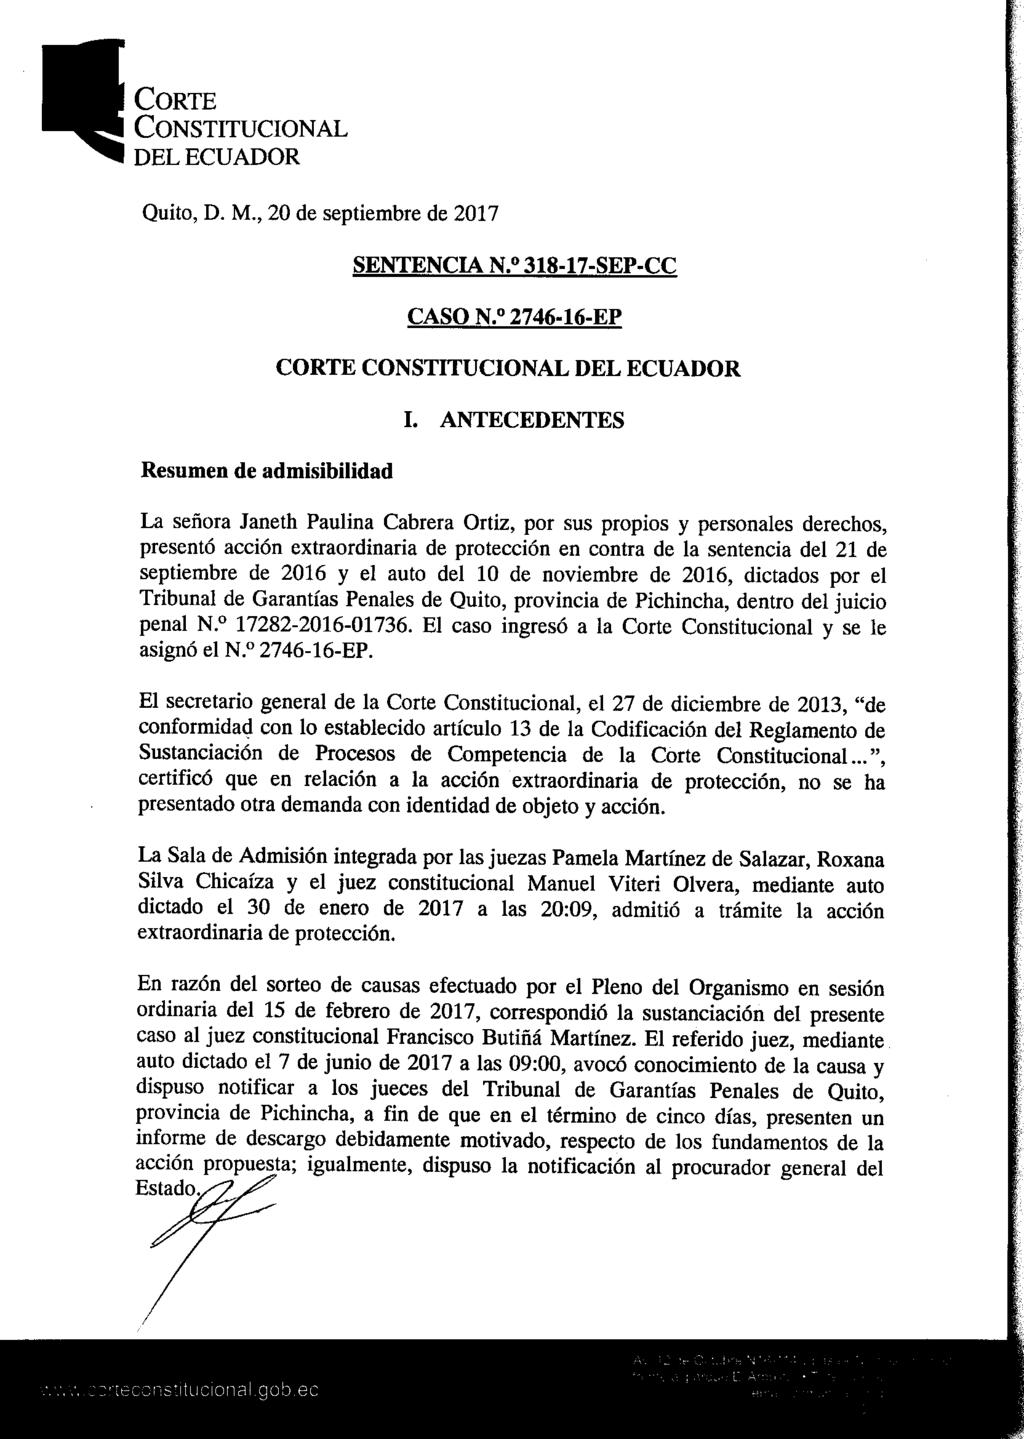 Constitucional Quito, D. M., 20 de septiembre de 2017 SENTENCIA N. 318-17-SEP-CC CASON. 2746-16-EP CORTE CONSTITUCIONAL DEL ECUADOR I.